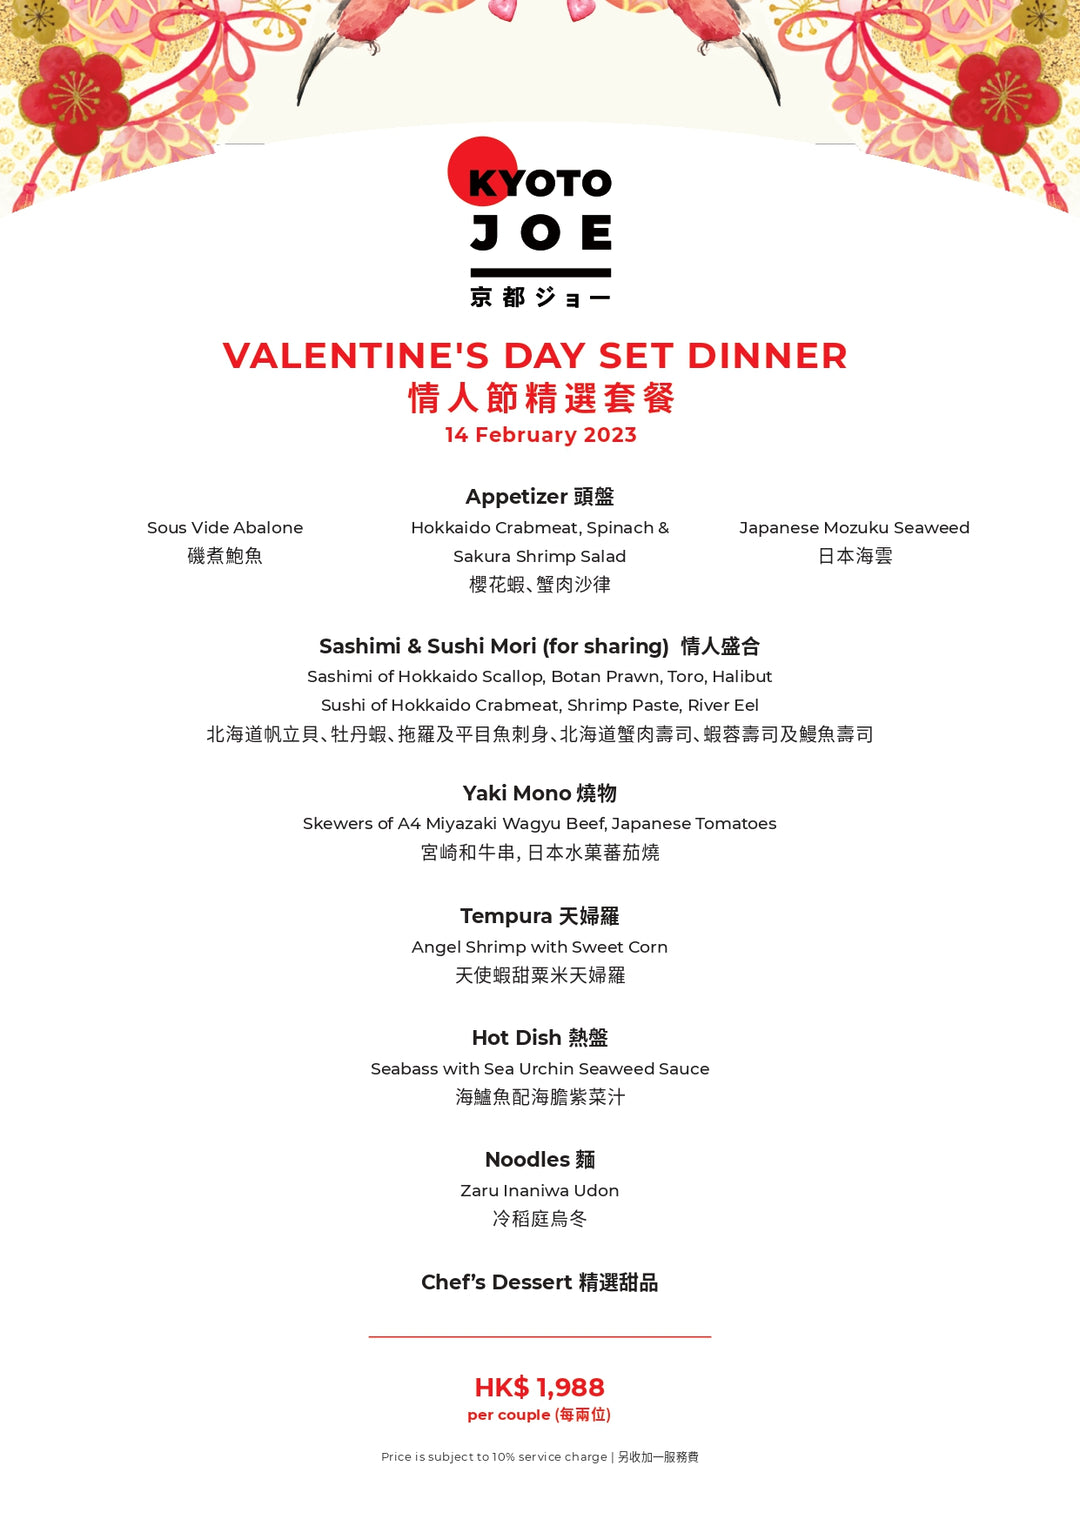 Kyoto Joe Valentine's Day Dinner